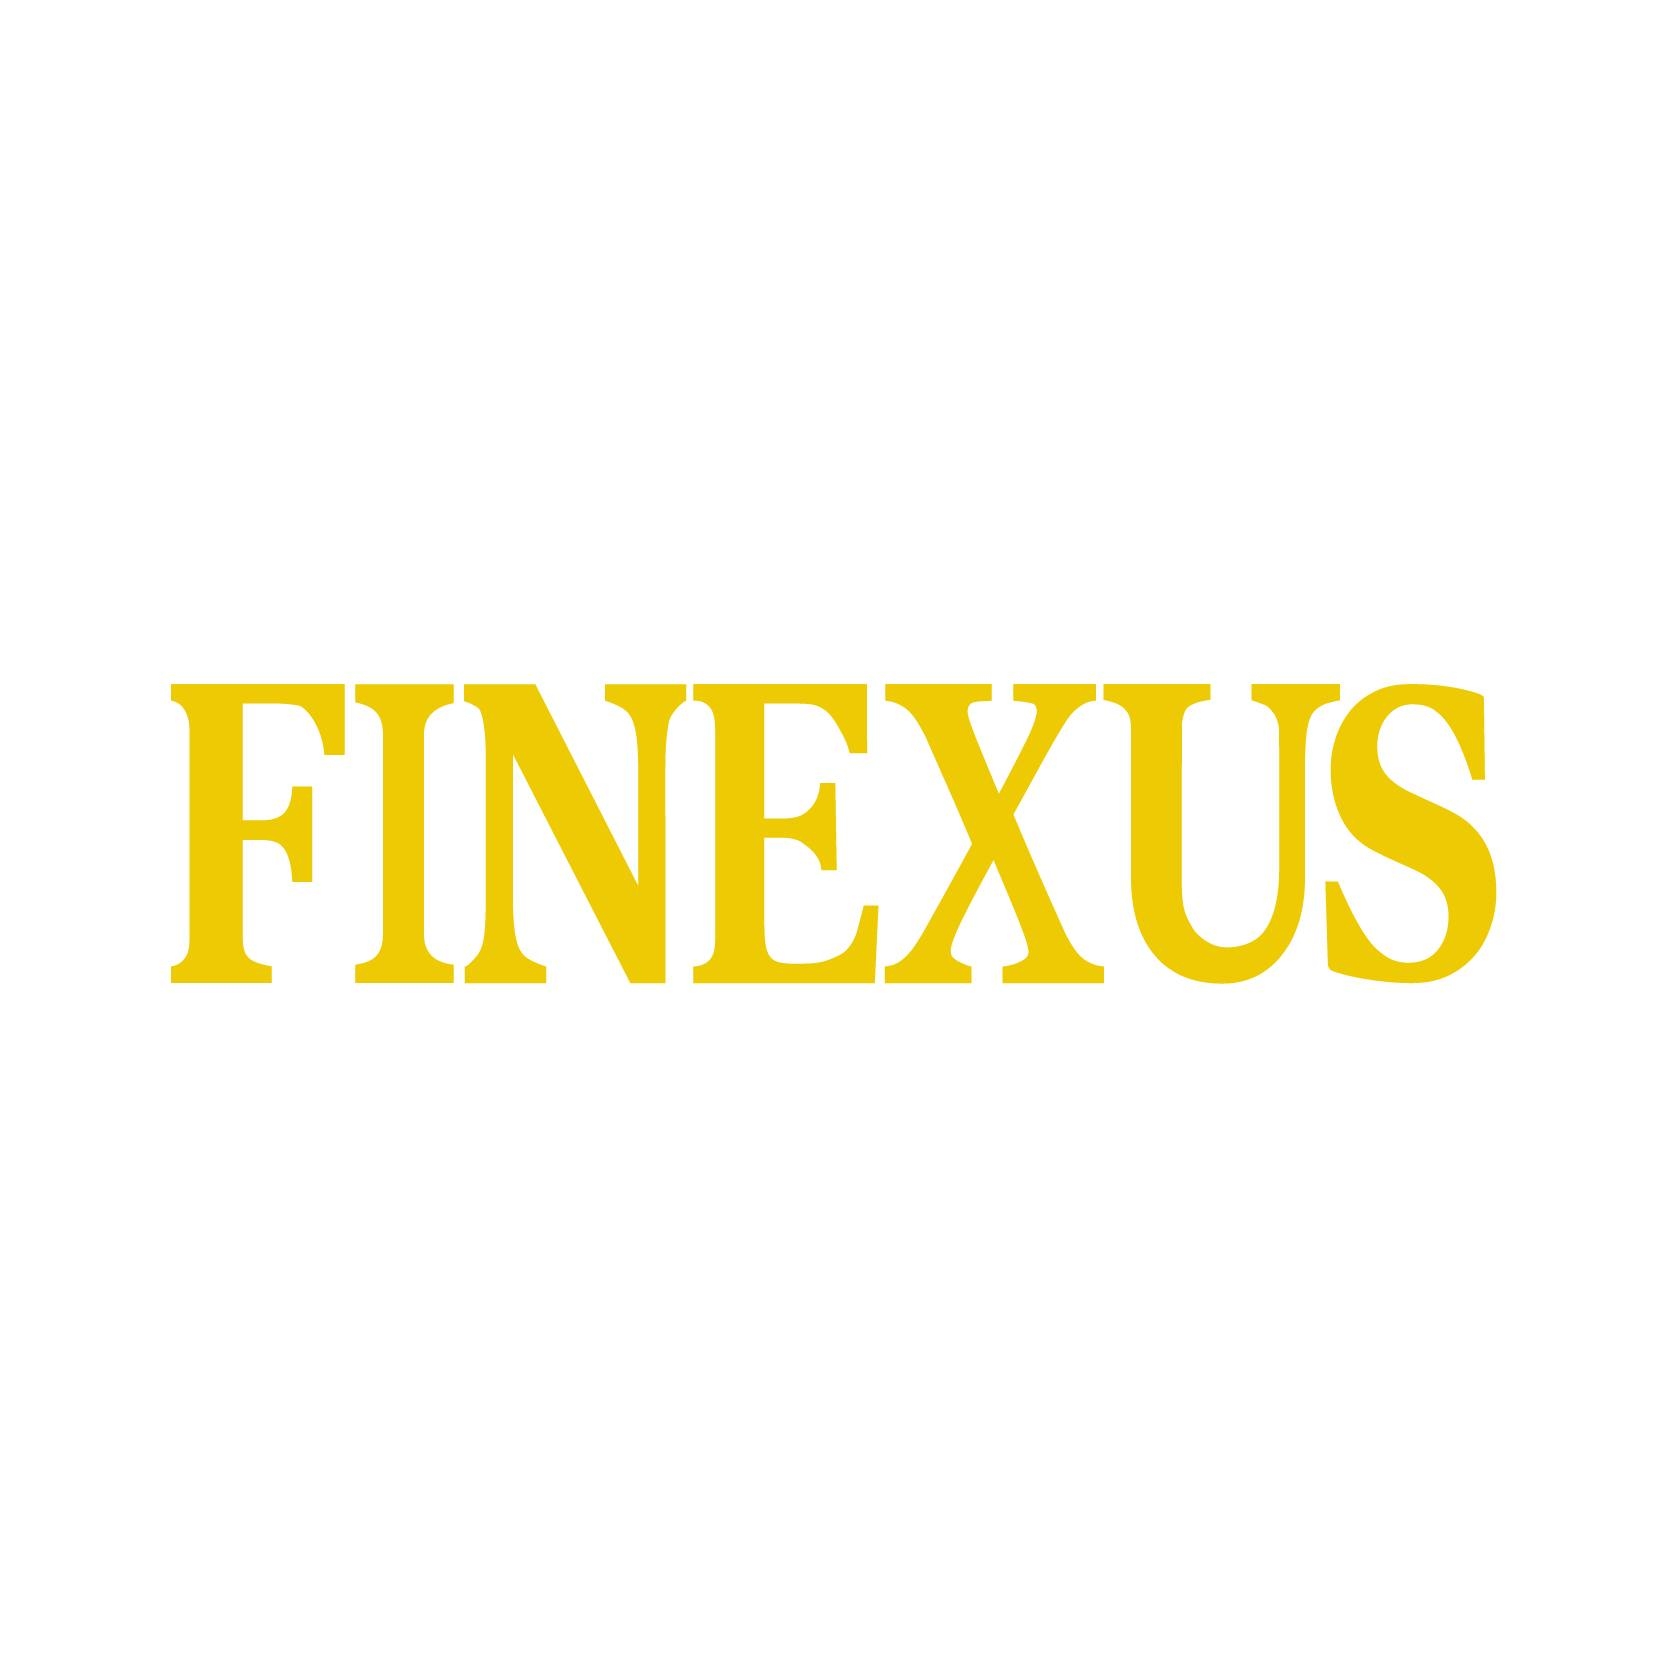 Finexus Group